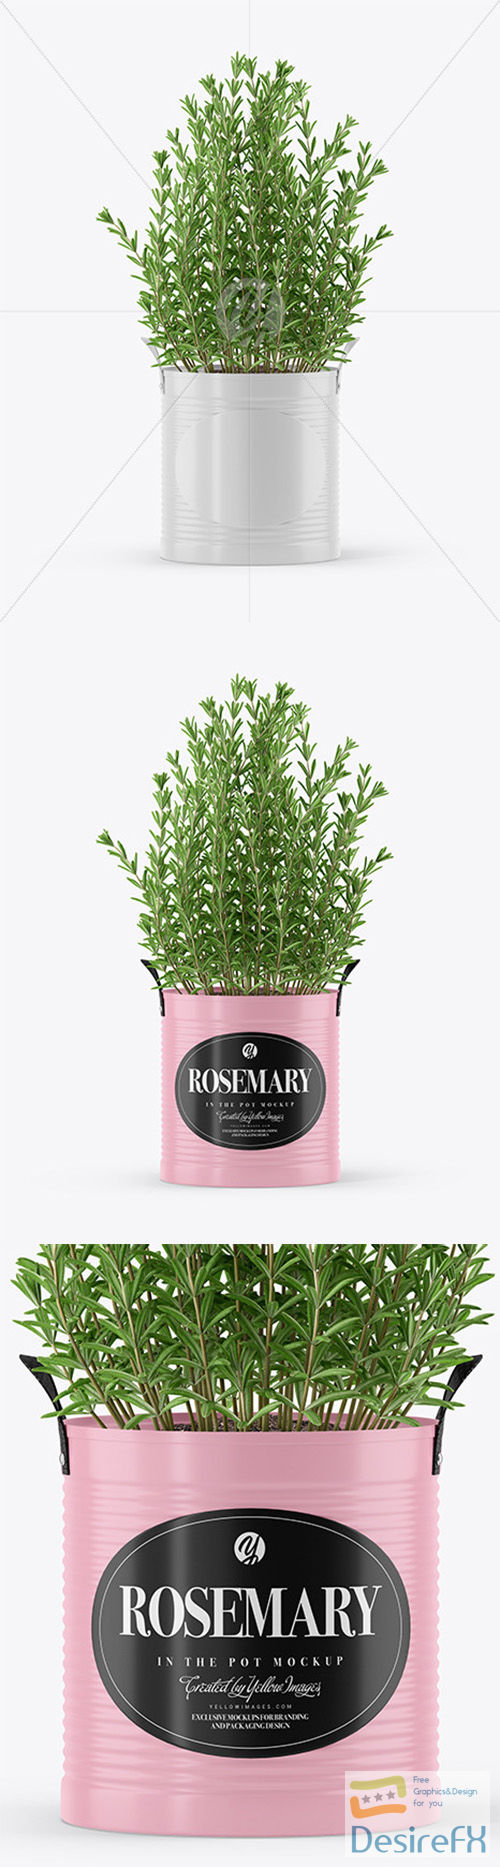 Rosemary in The Pot Mockup 66554